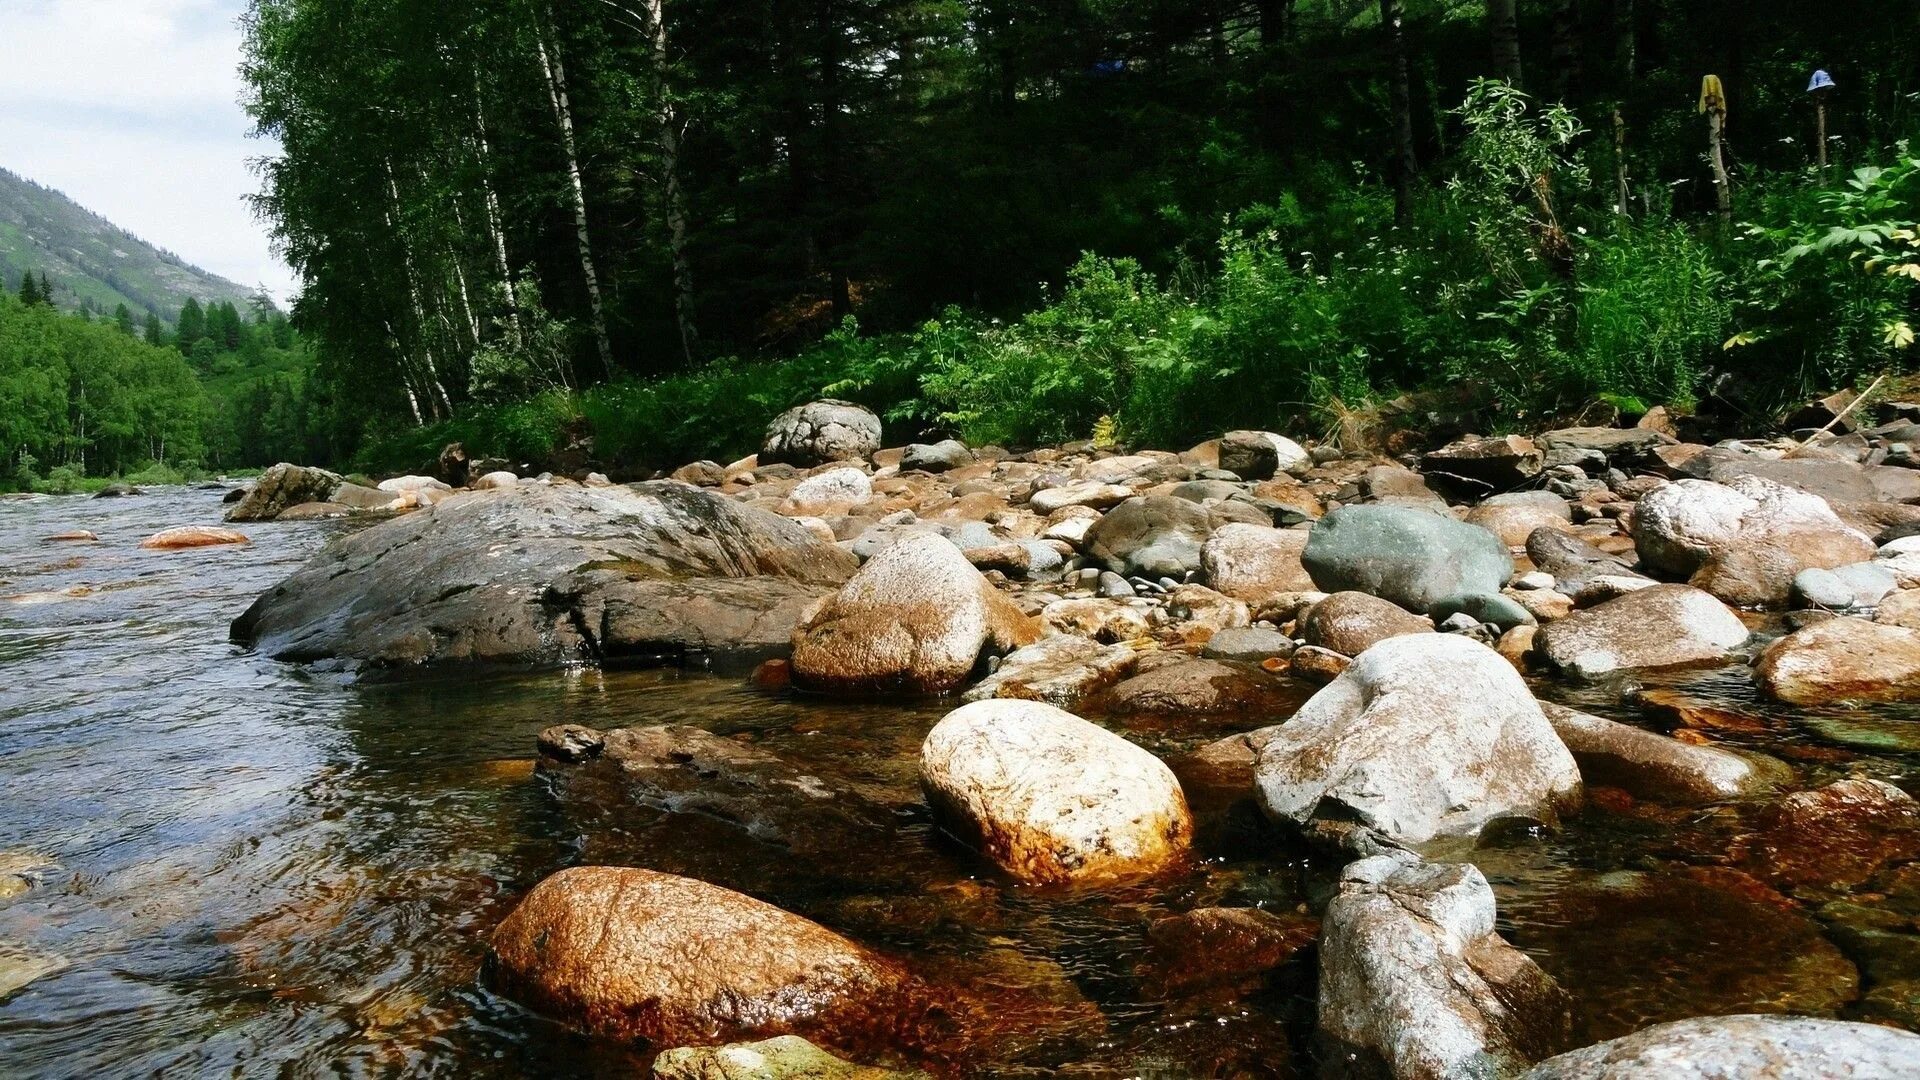 Stone river. Каменистый берег горный Алтай. Камни валуны берег река ручей. Карелия каменный ручей. Каменистый берег реки.